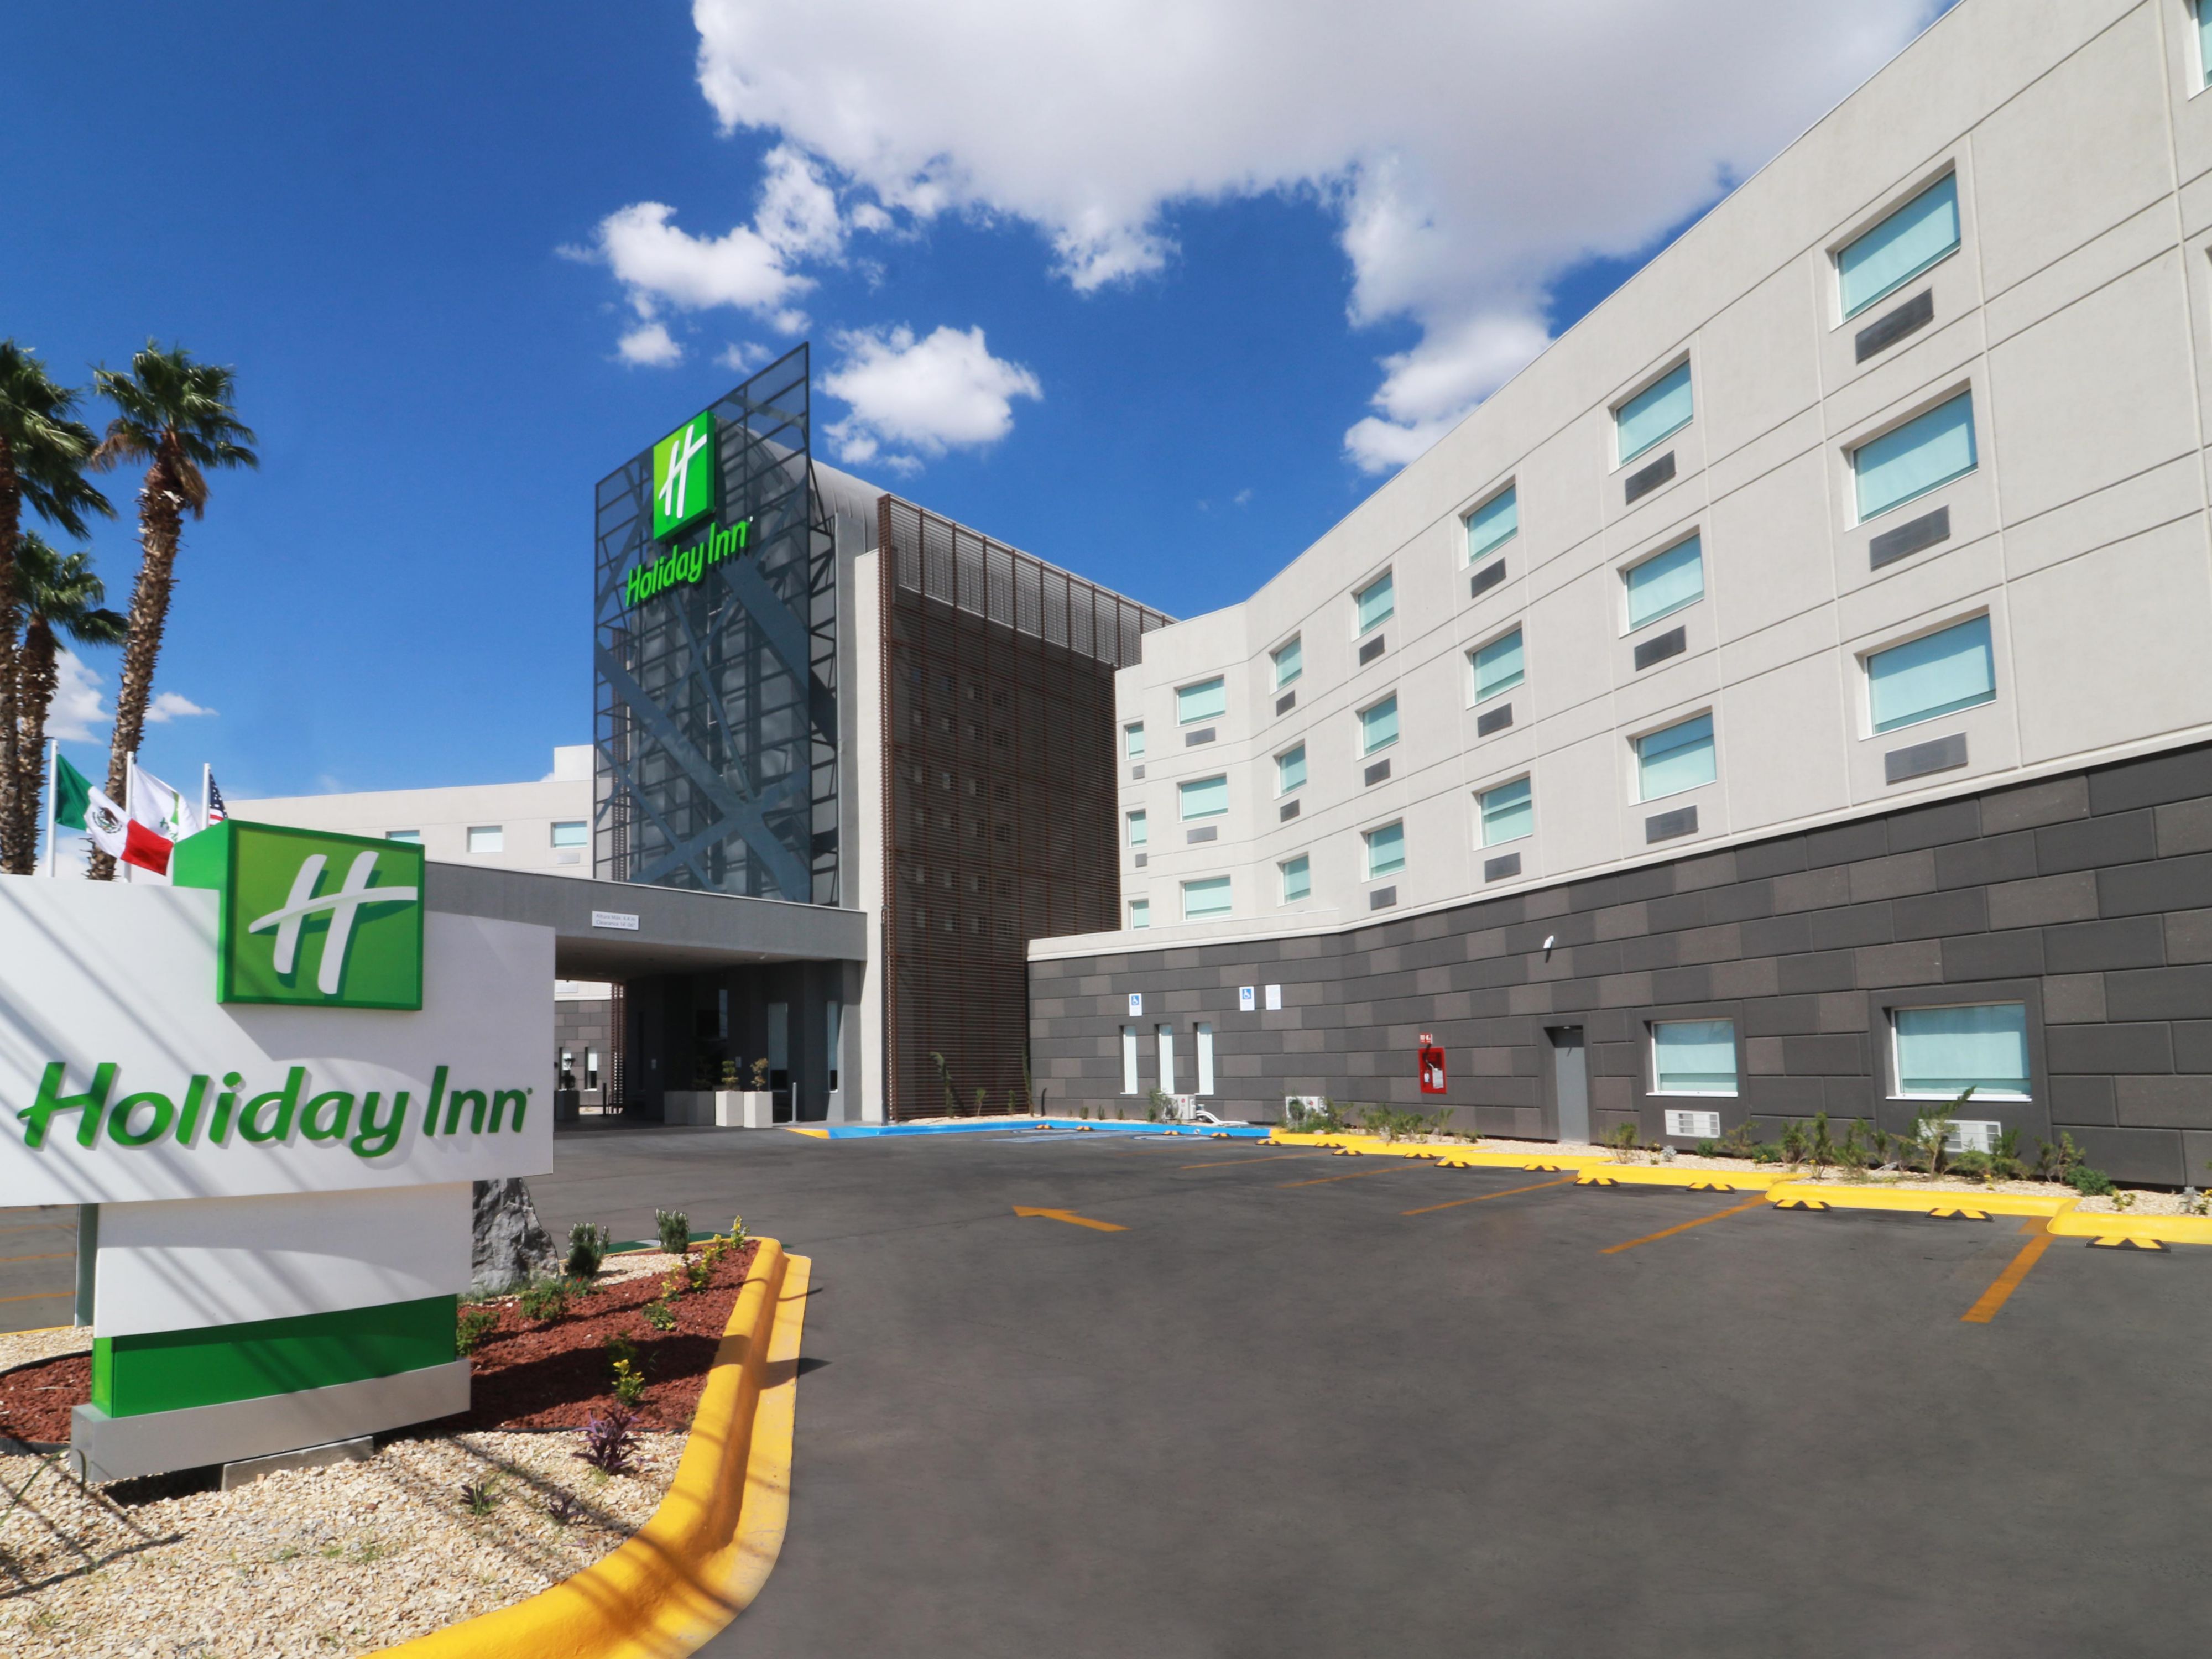 Hotel Specials for Holiday Inn Ciudad Juarez